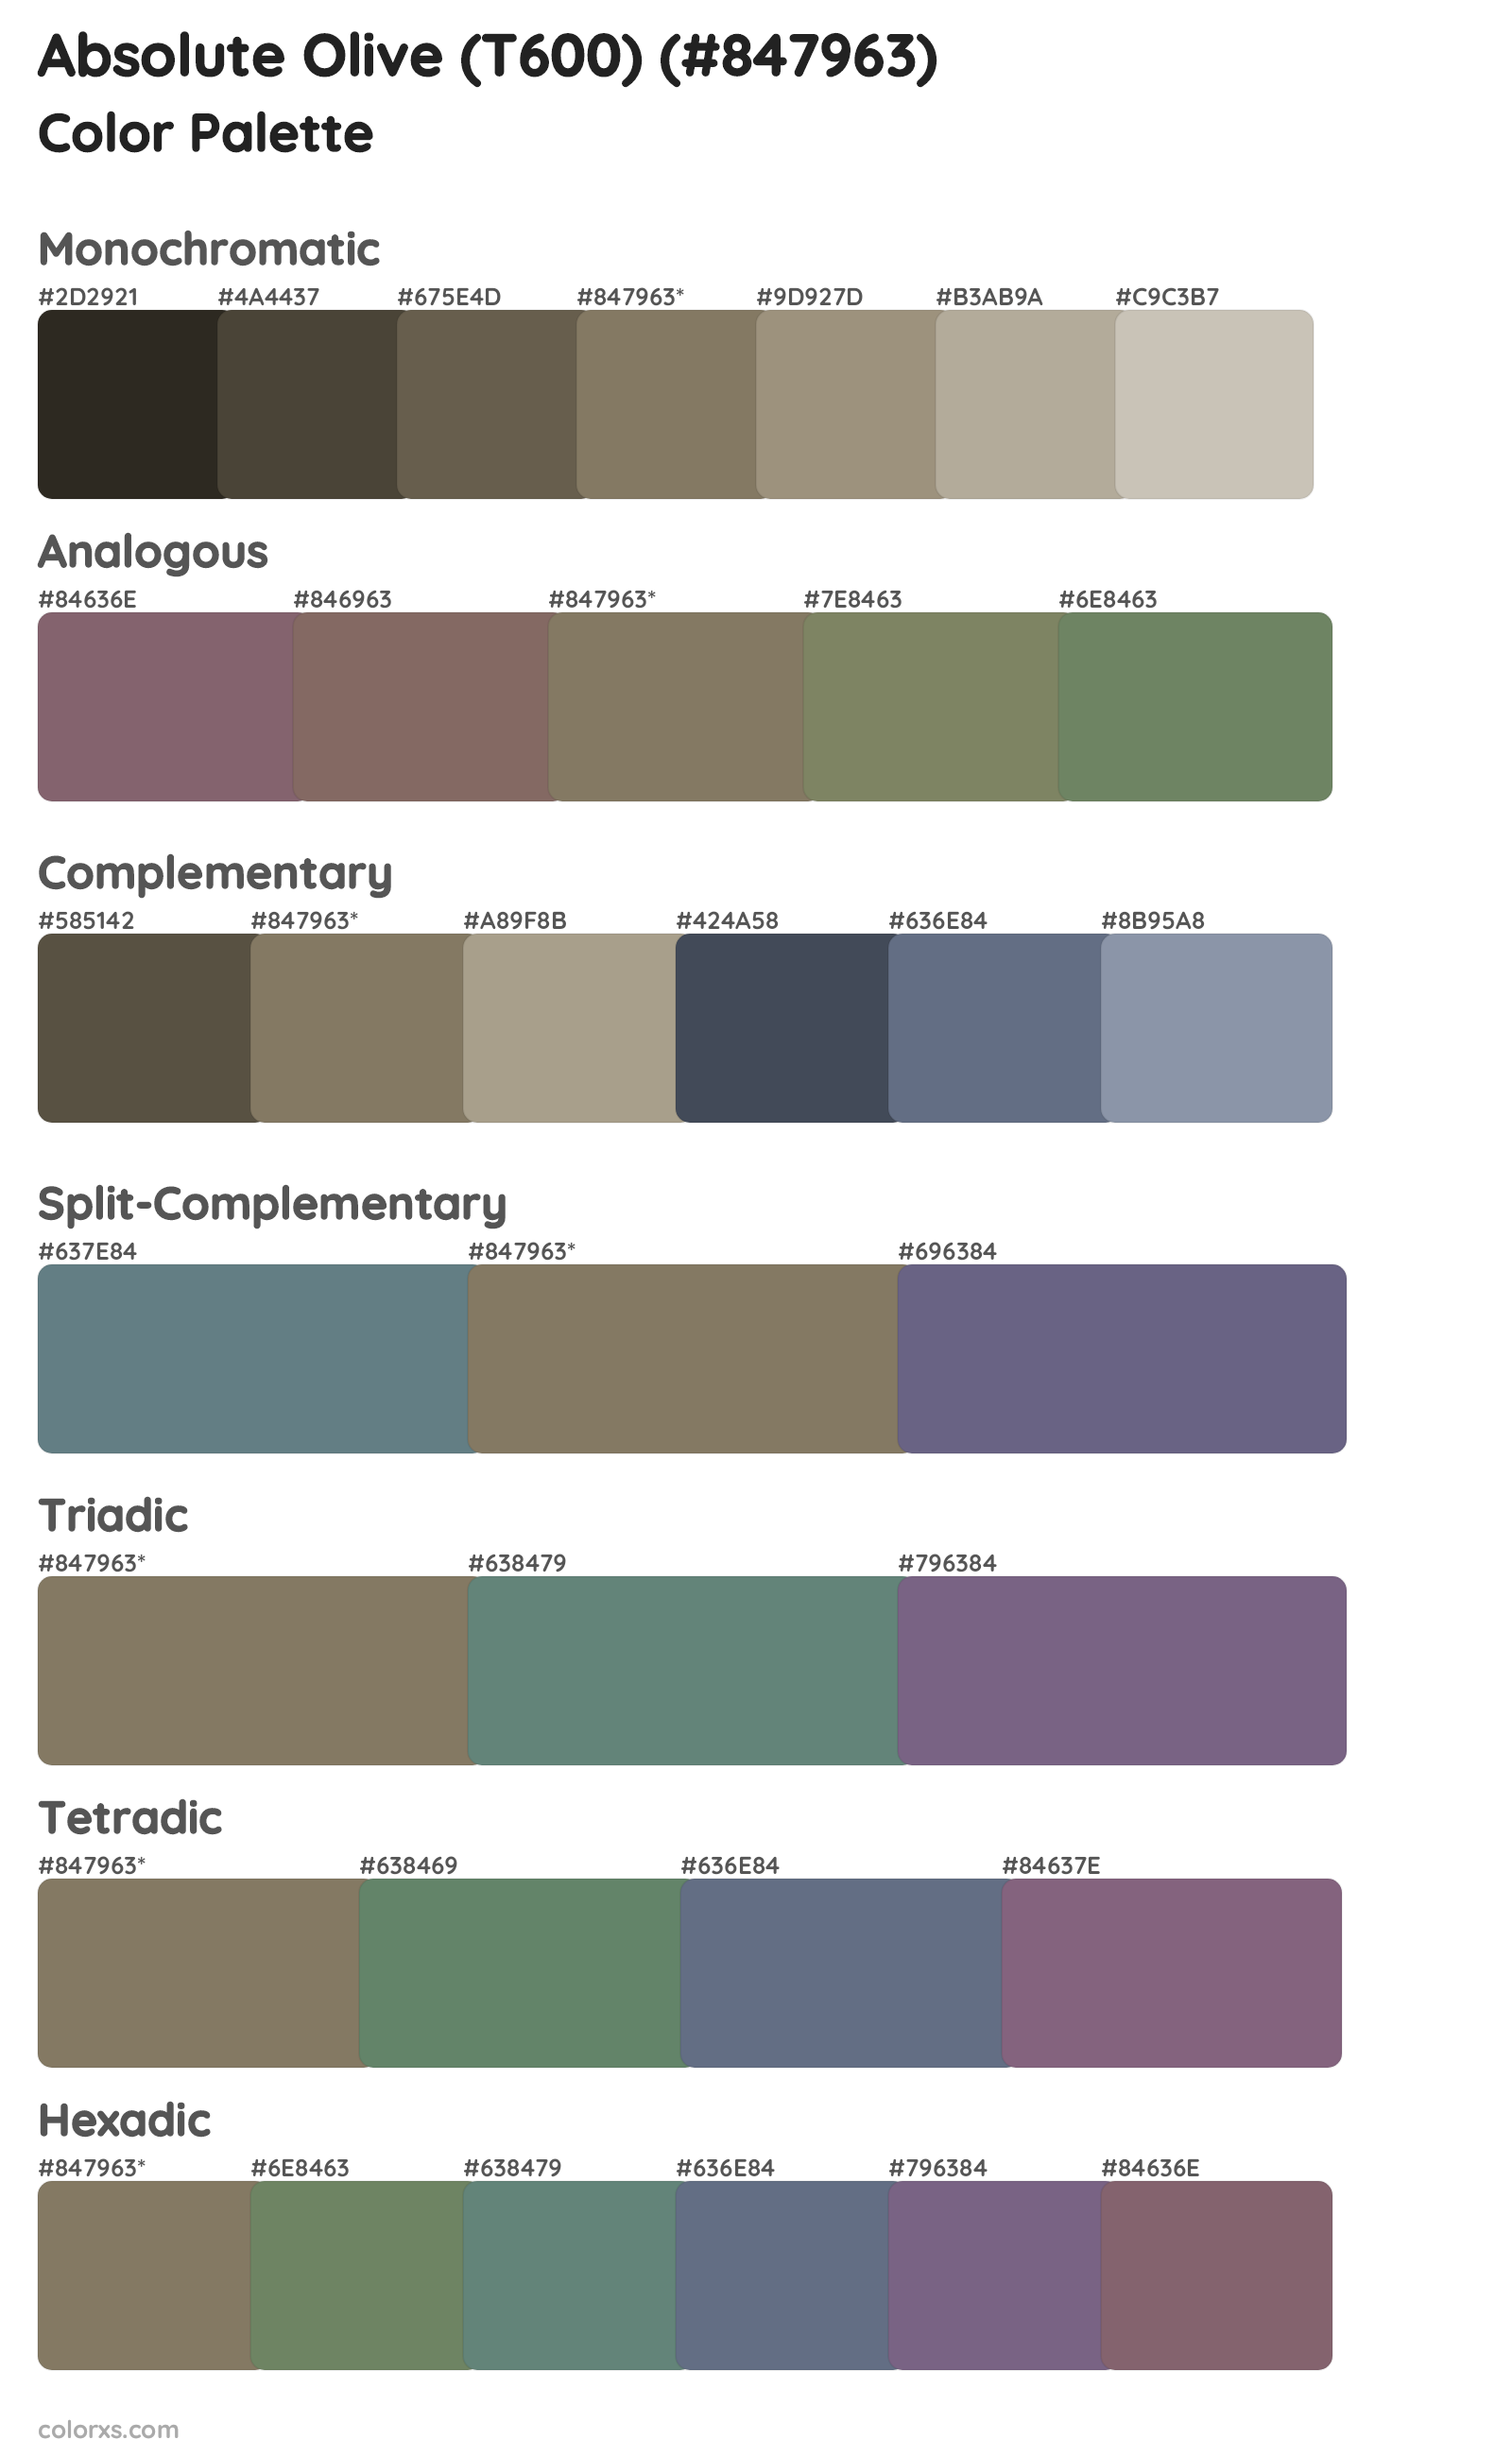 Absolute Olive (T600) Color Scheme Palettes